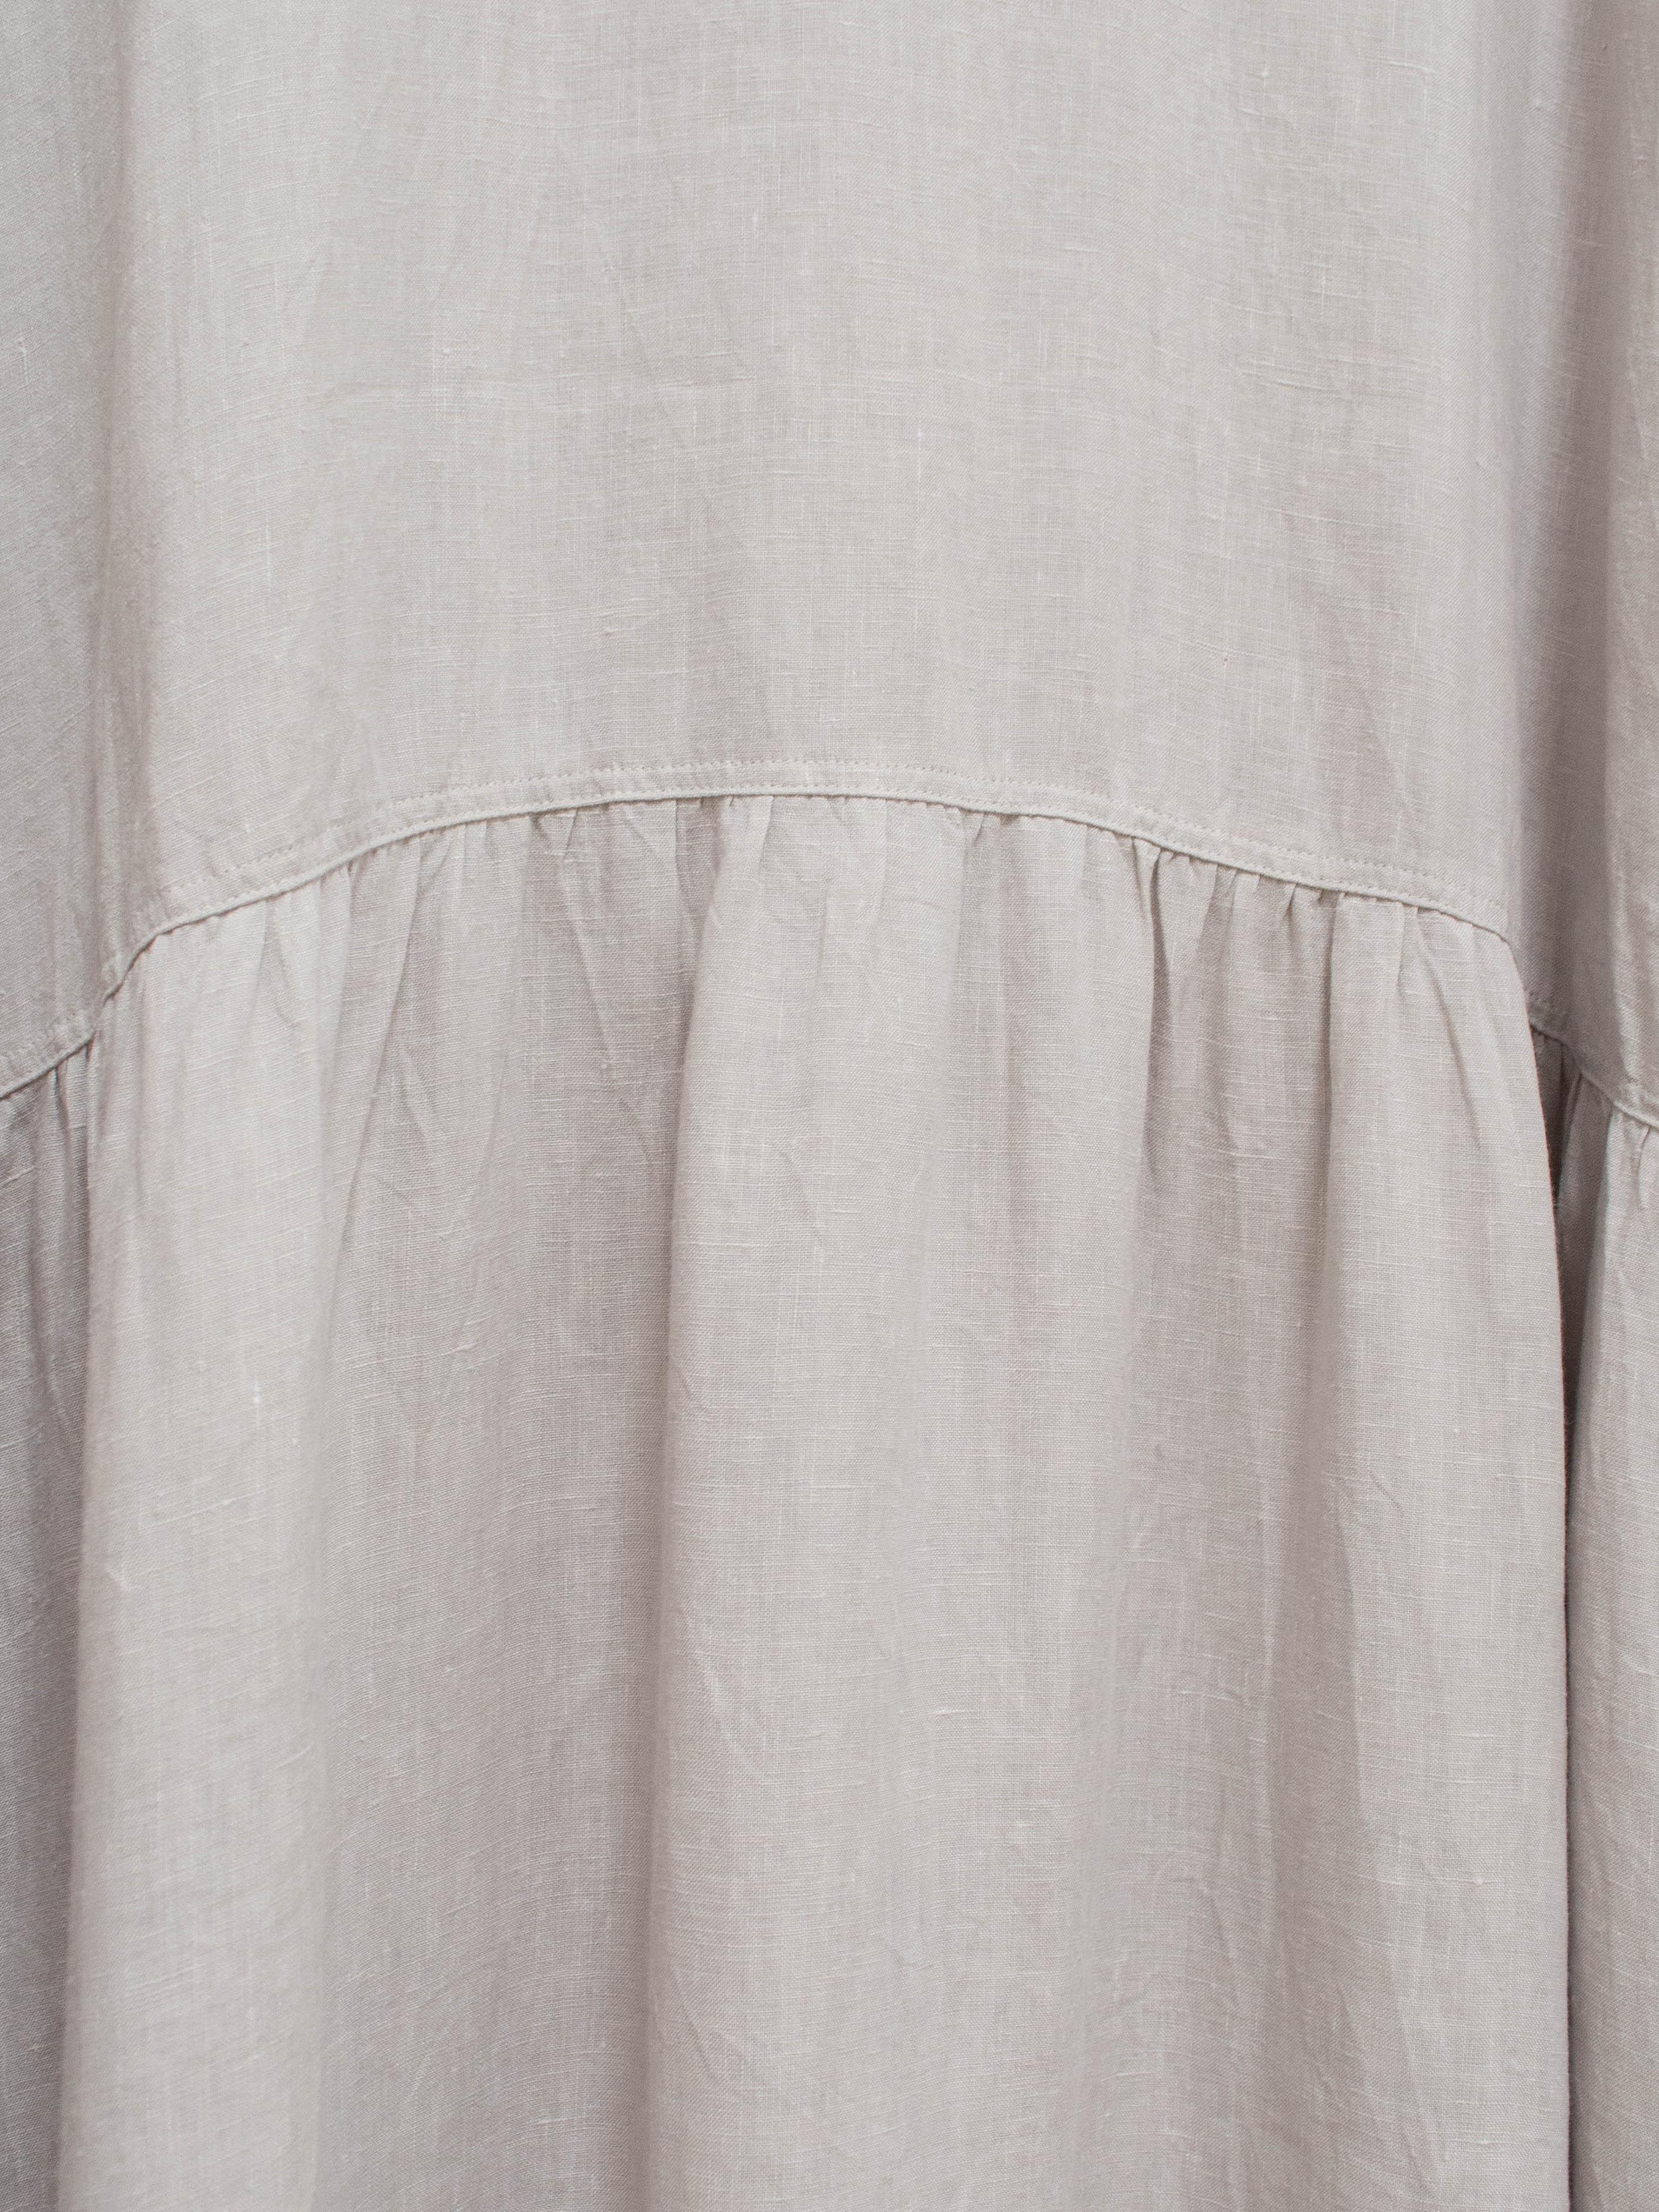 Namu Shop - Ichi Antiquites Color Linen Gather Dress - Light Gray